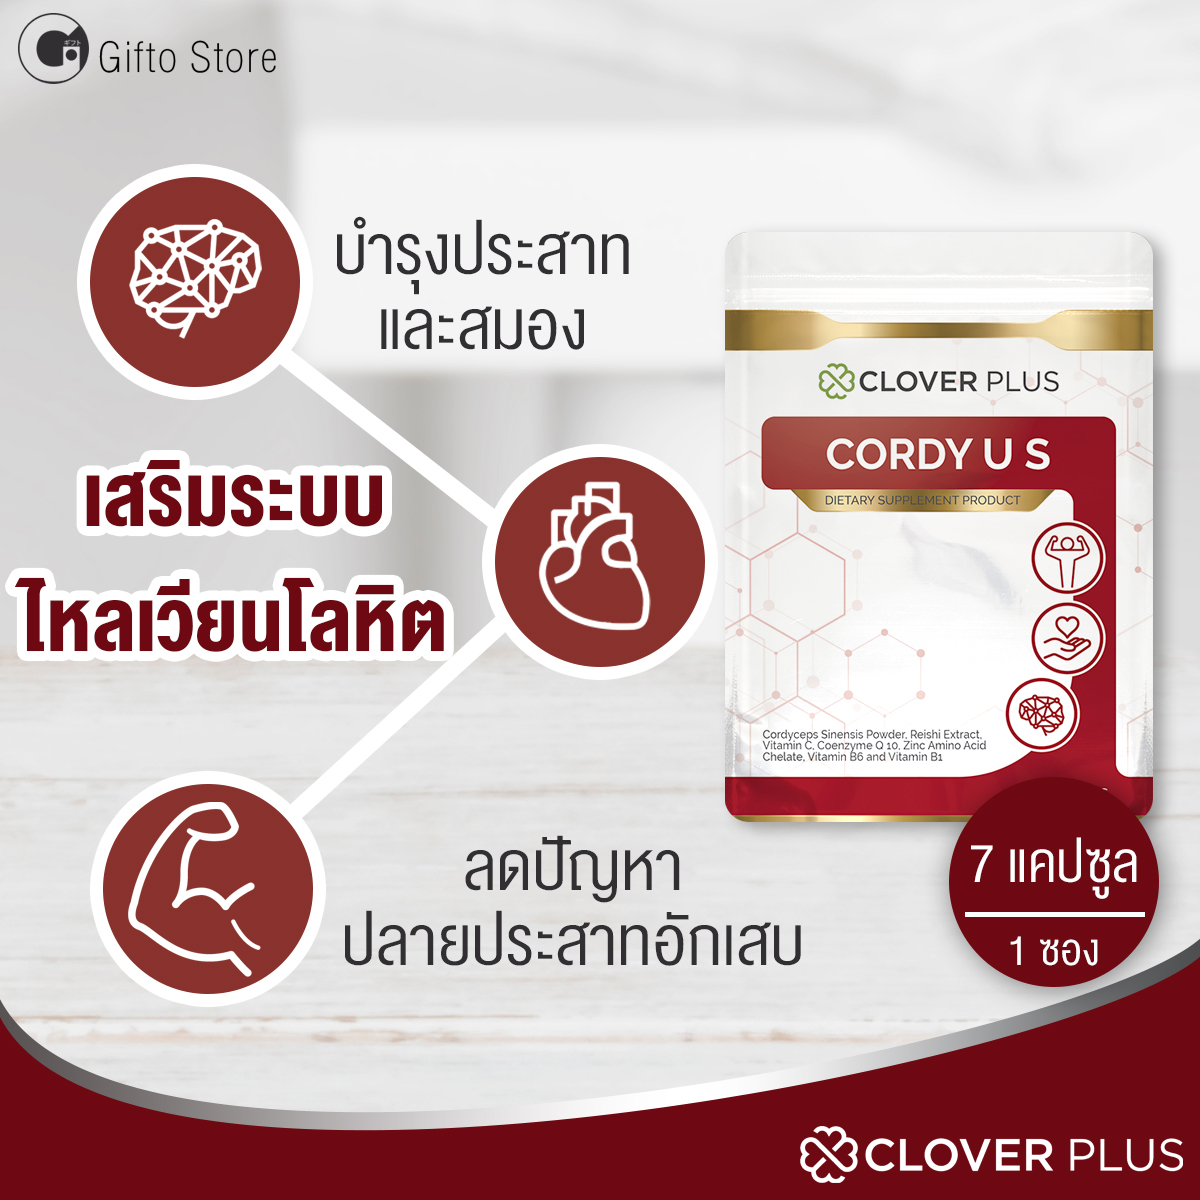 Clover Plus Cordy US คอร์ดี้ ถังเช่า อาหารเสริม สารสกัด ถั่งเช่า วิตามินบี เห็ดหลินจือ สำหรับ น้ำตาล เลือด หัวใจ ภูมิต้านทาน รวม 1 ซอง 7 แคปซูล